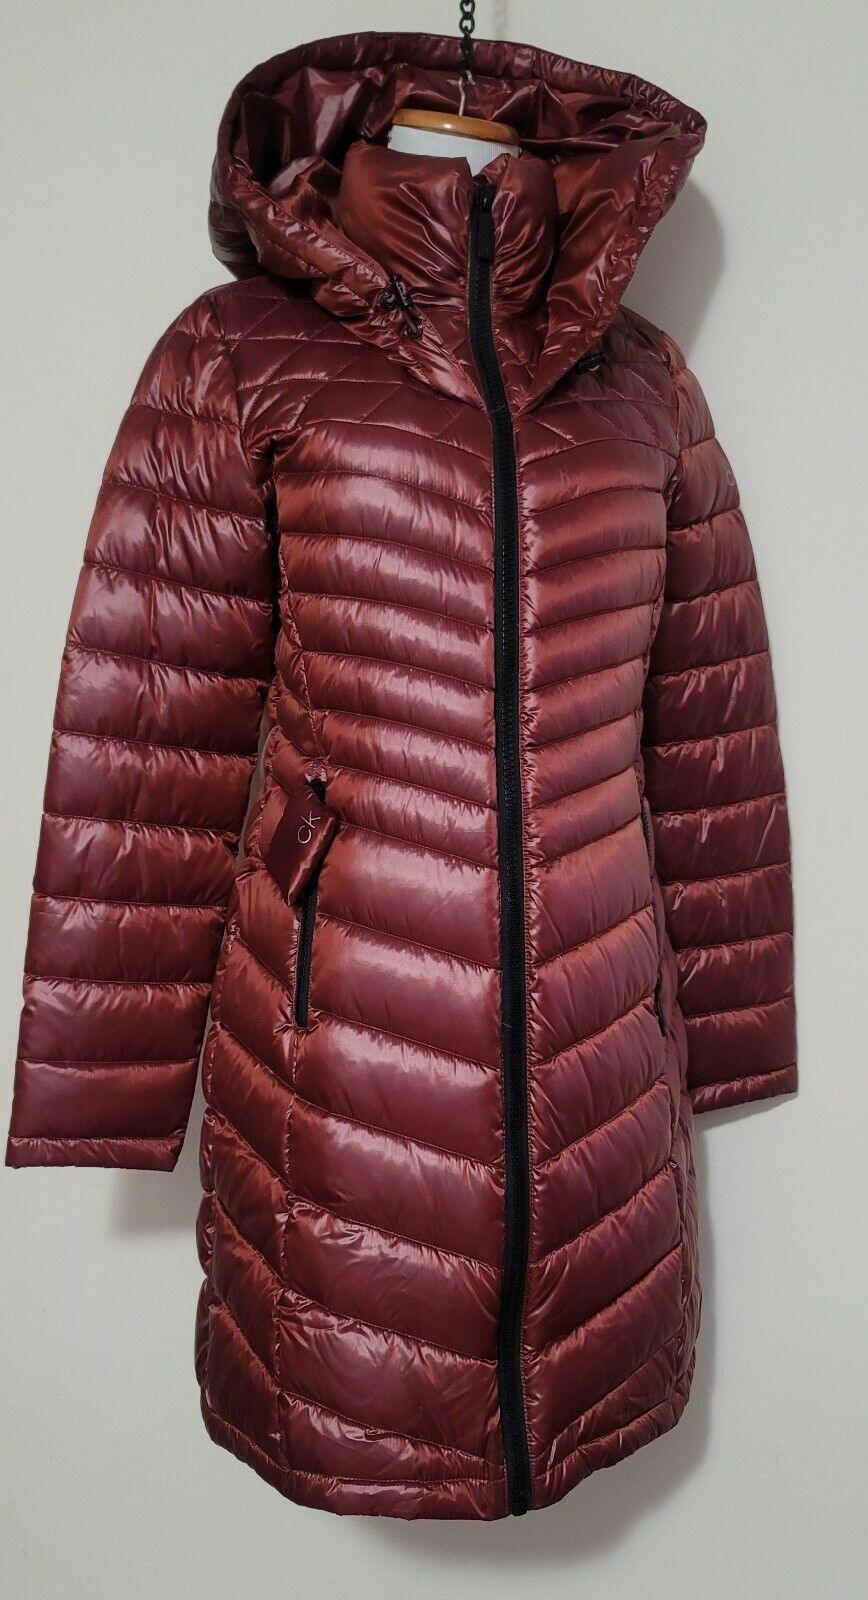 Calvin Klein Women's Hooded Packable Premium Down Puffer Coat Dark Copper  S - SVNYFancy